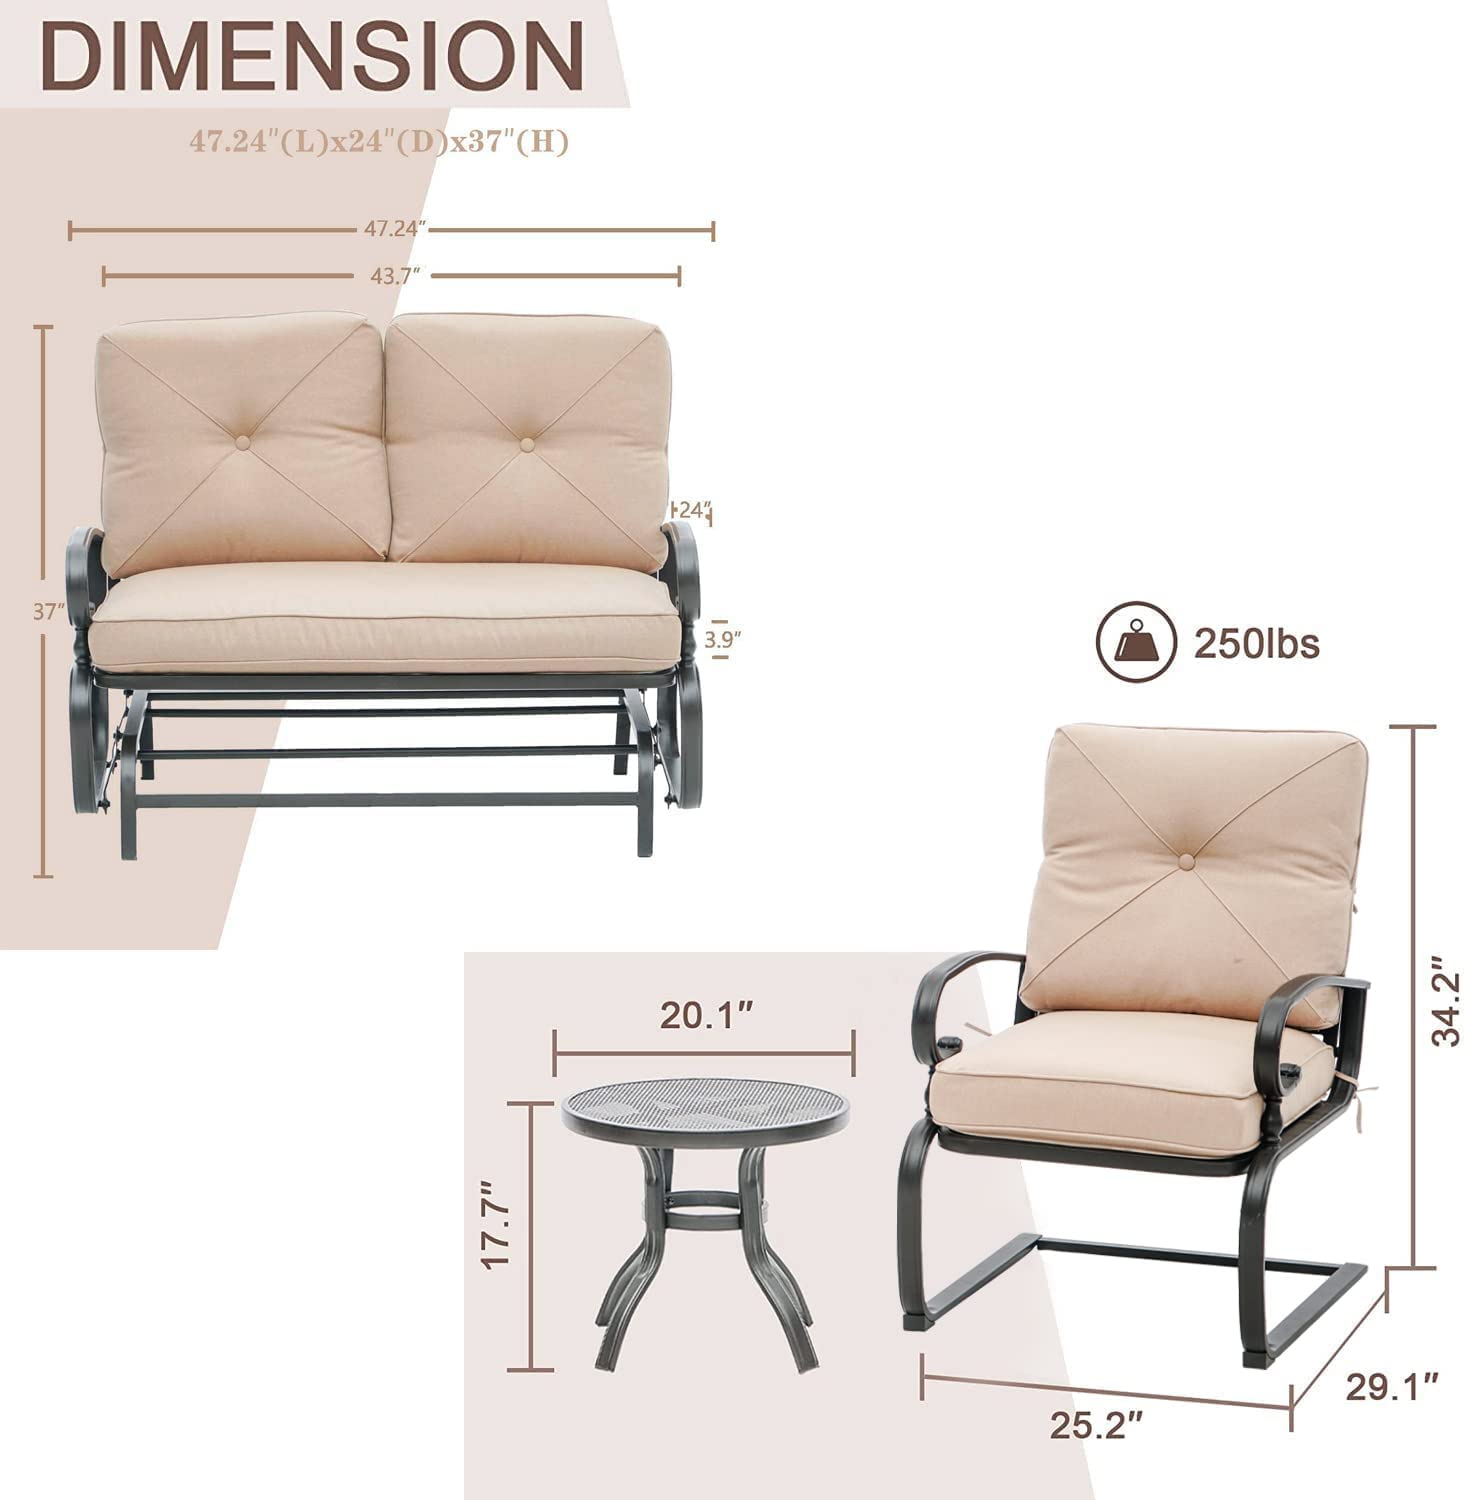 SUNCROWN 4-Piece Outdoor Patio Furniture Set Wrought Iron Conversation Set, Brown - image 2 of 8